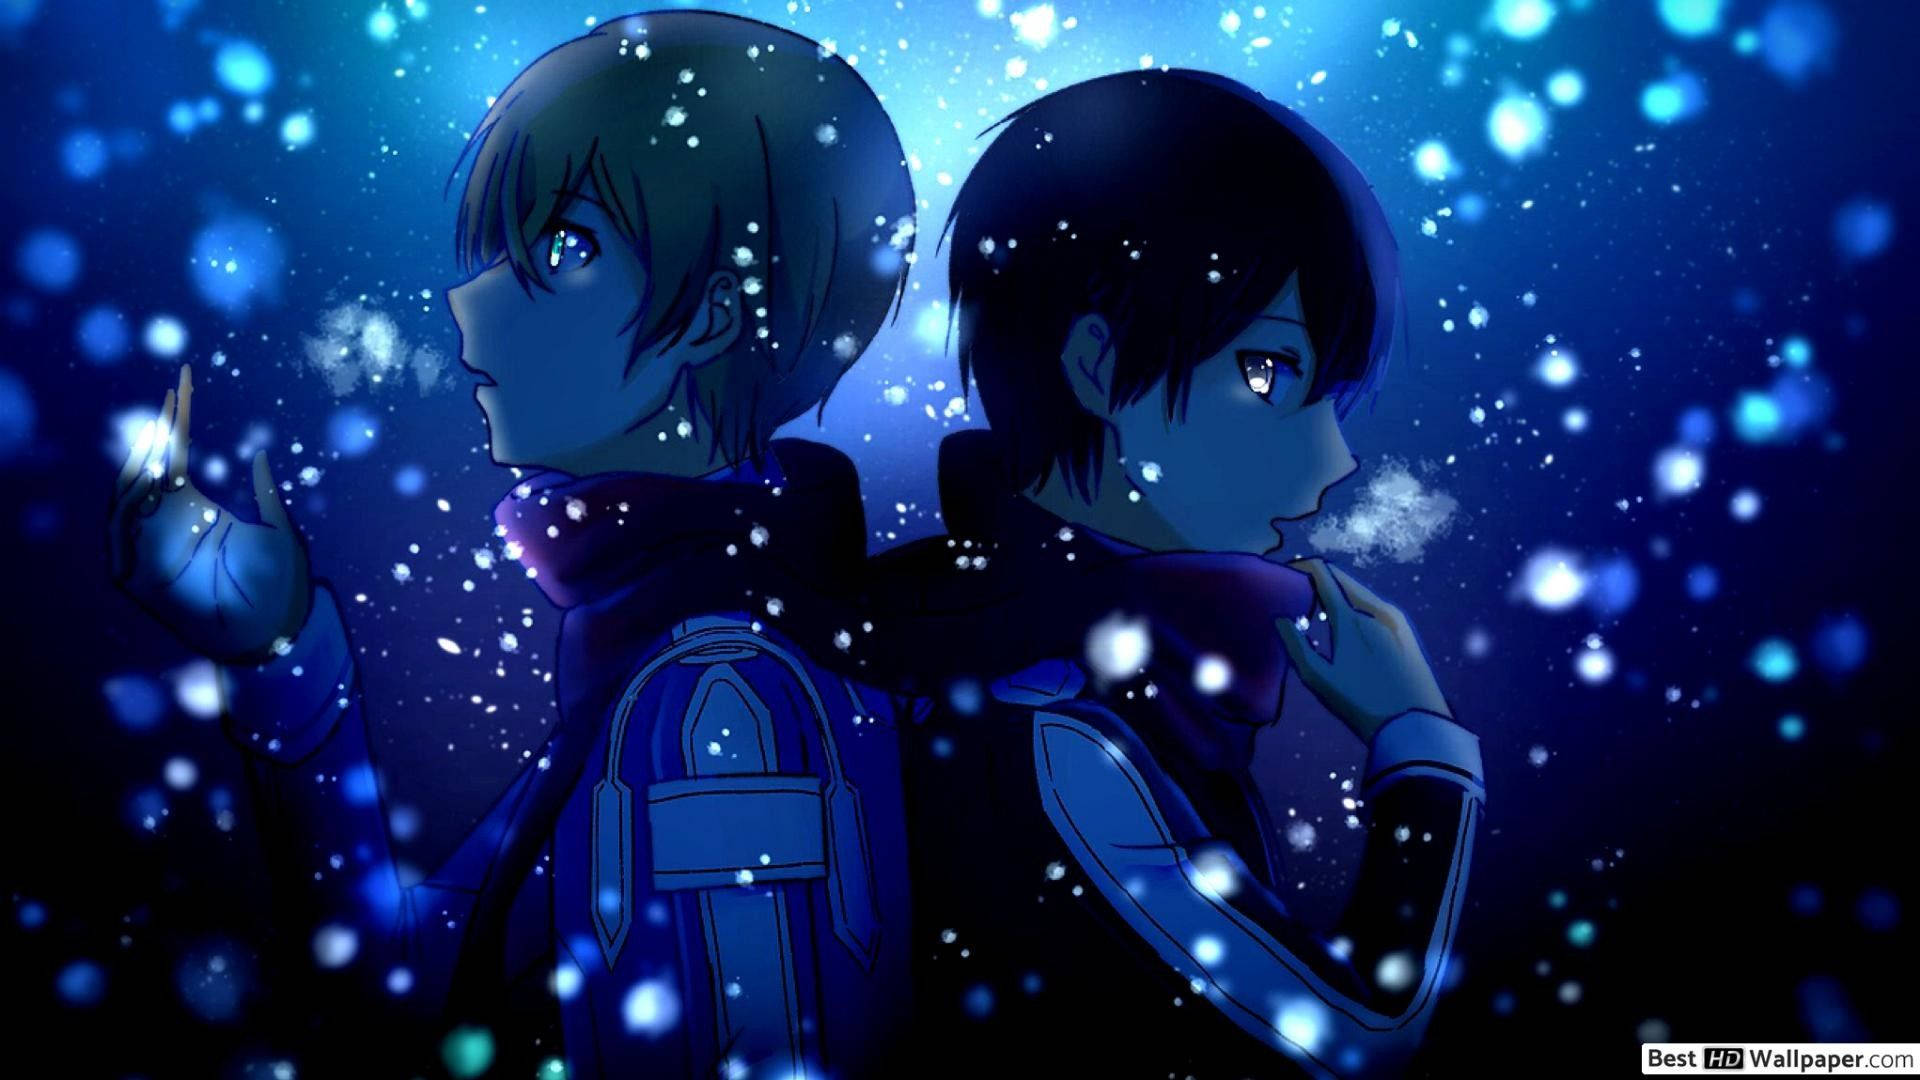 The Winter Adventures of Eugeo and Kirito from Sword Art Online: Alicization Wallpaper